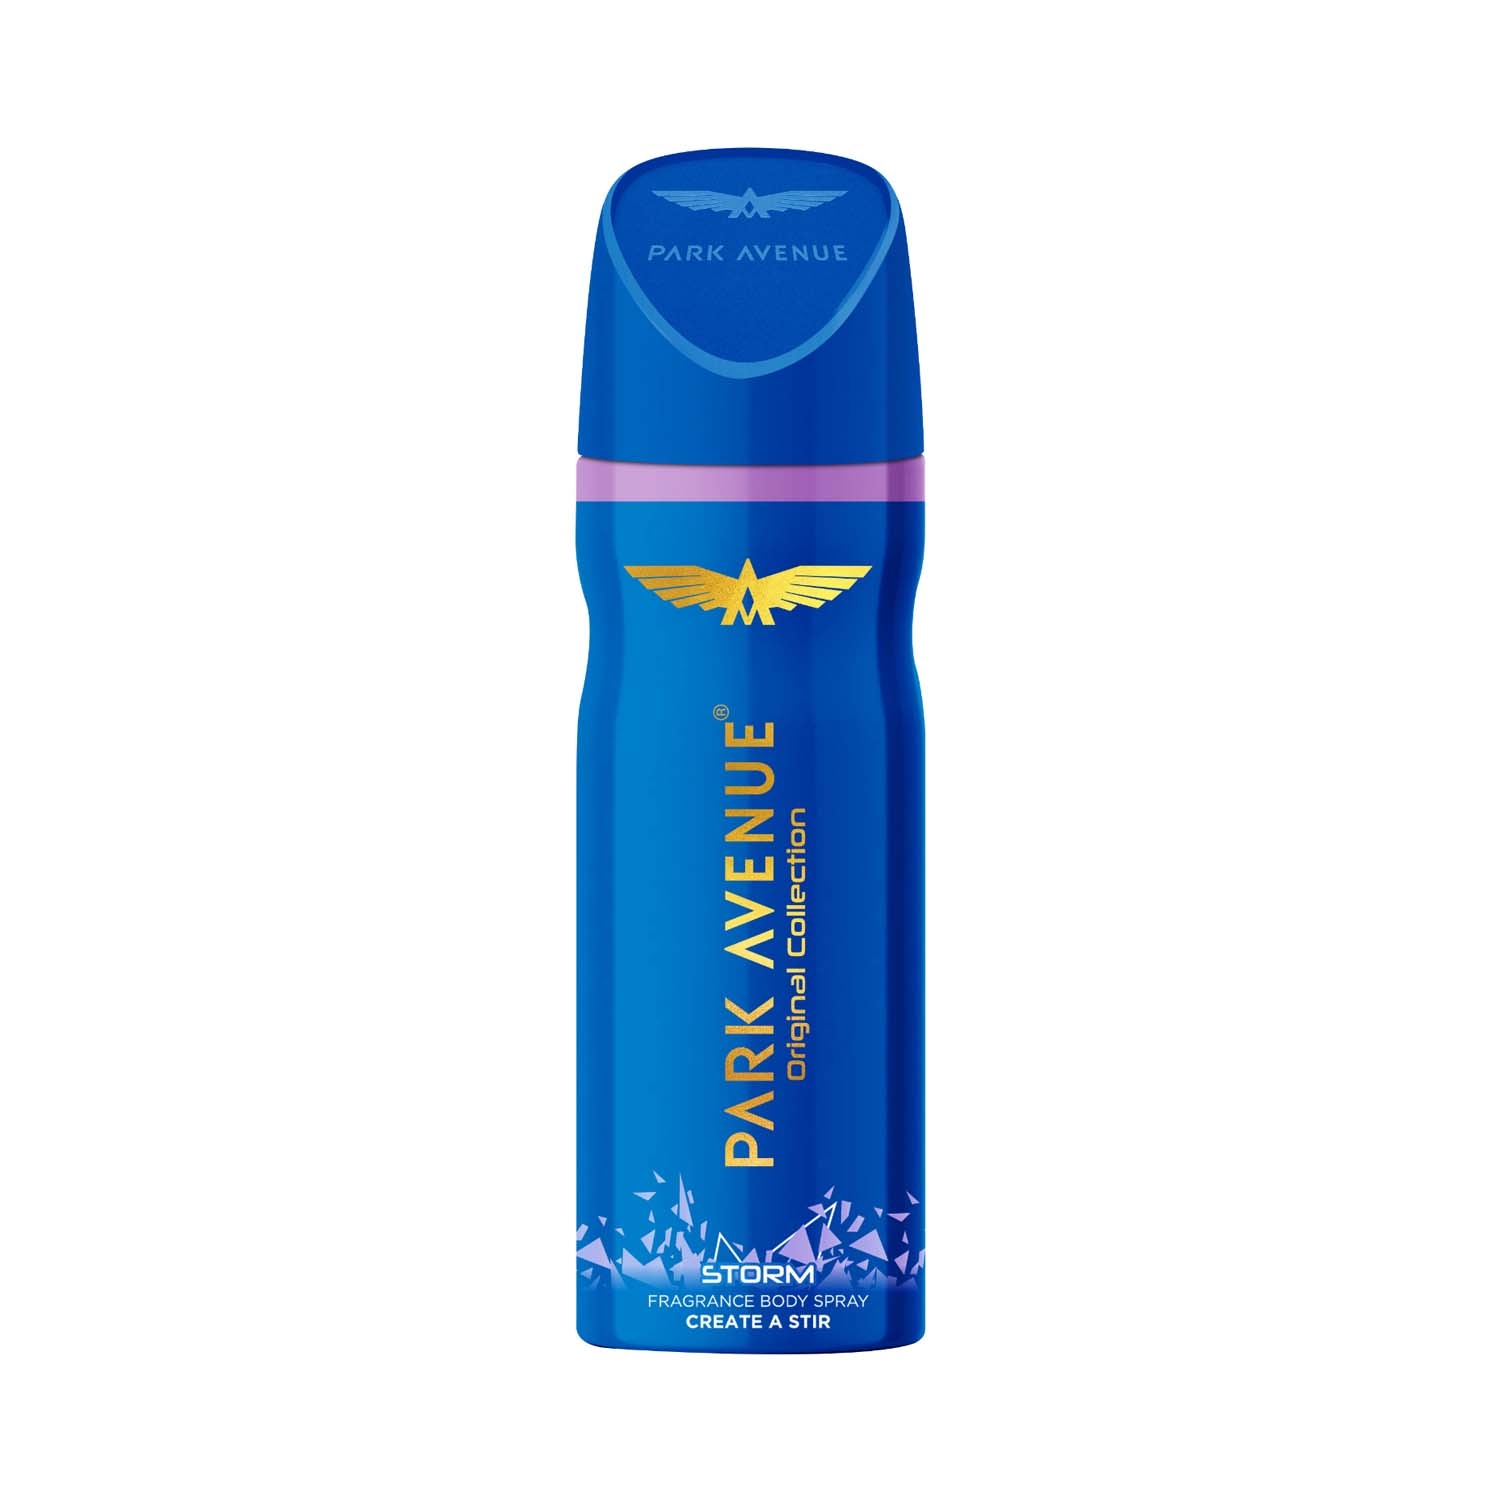 Park Avenue | Park Avenue Storm Fragrance Body Spray (150ml)